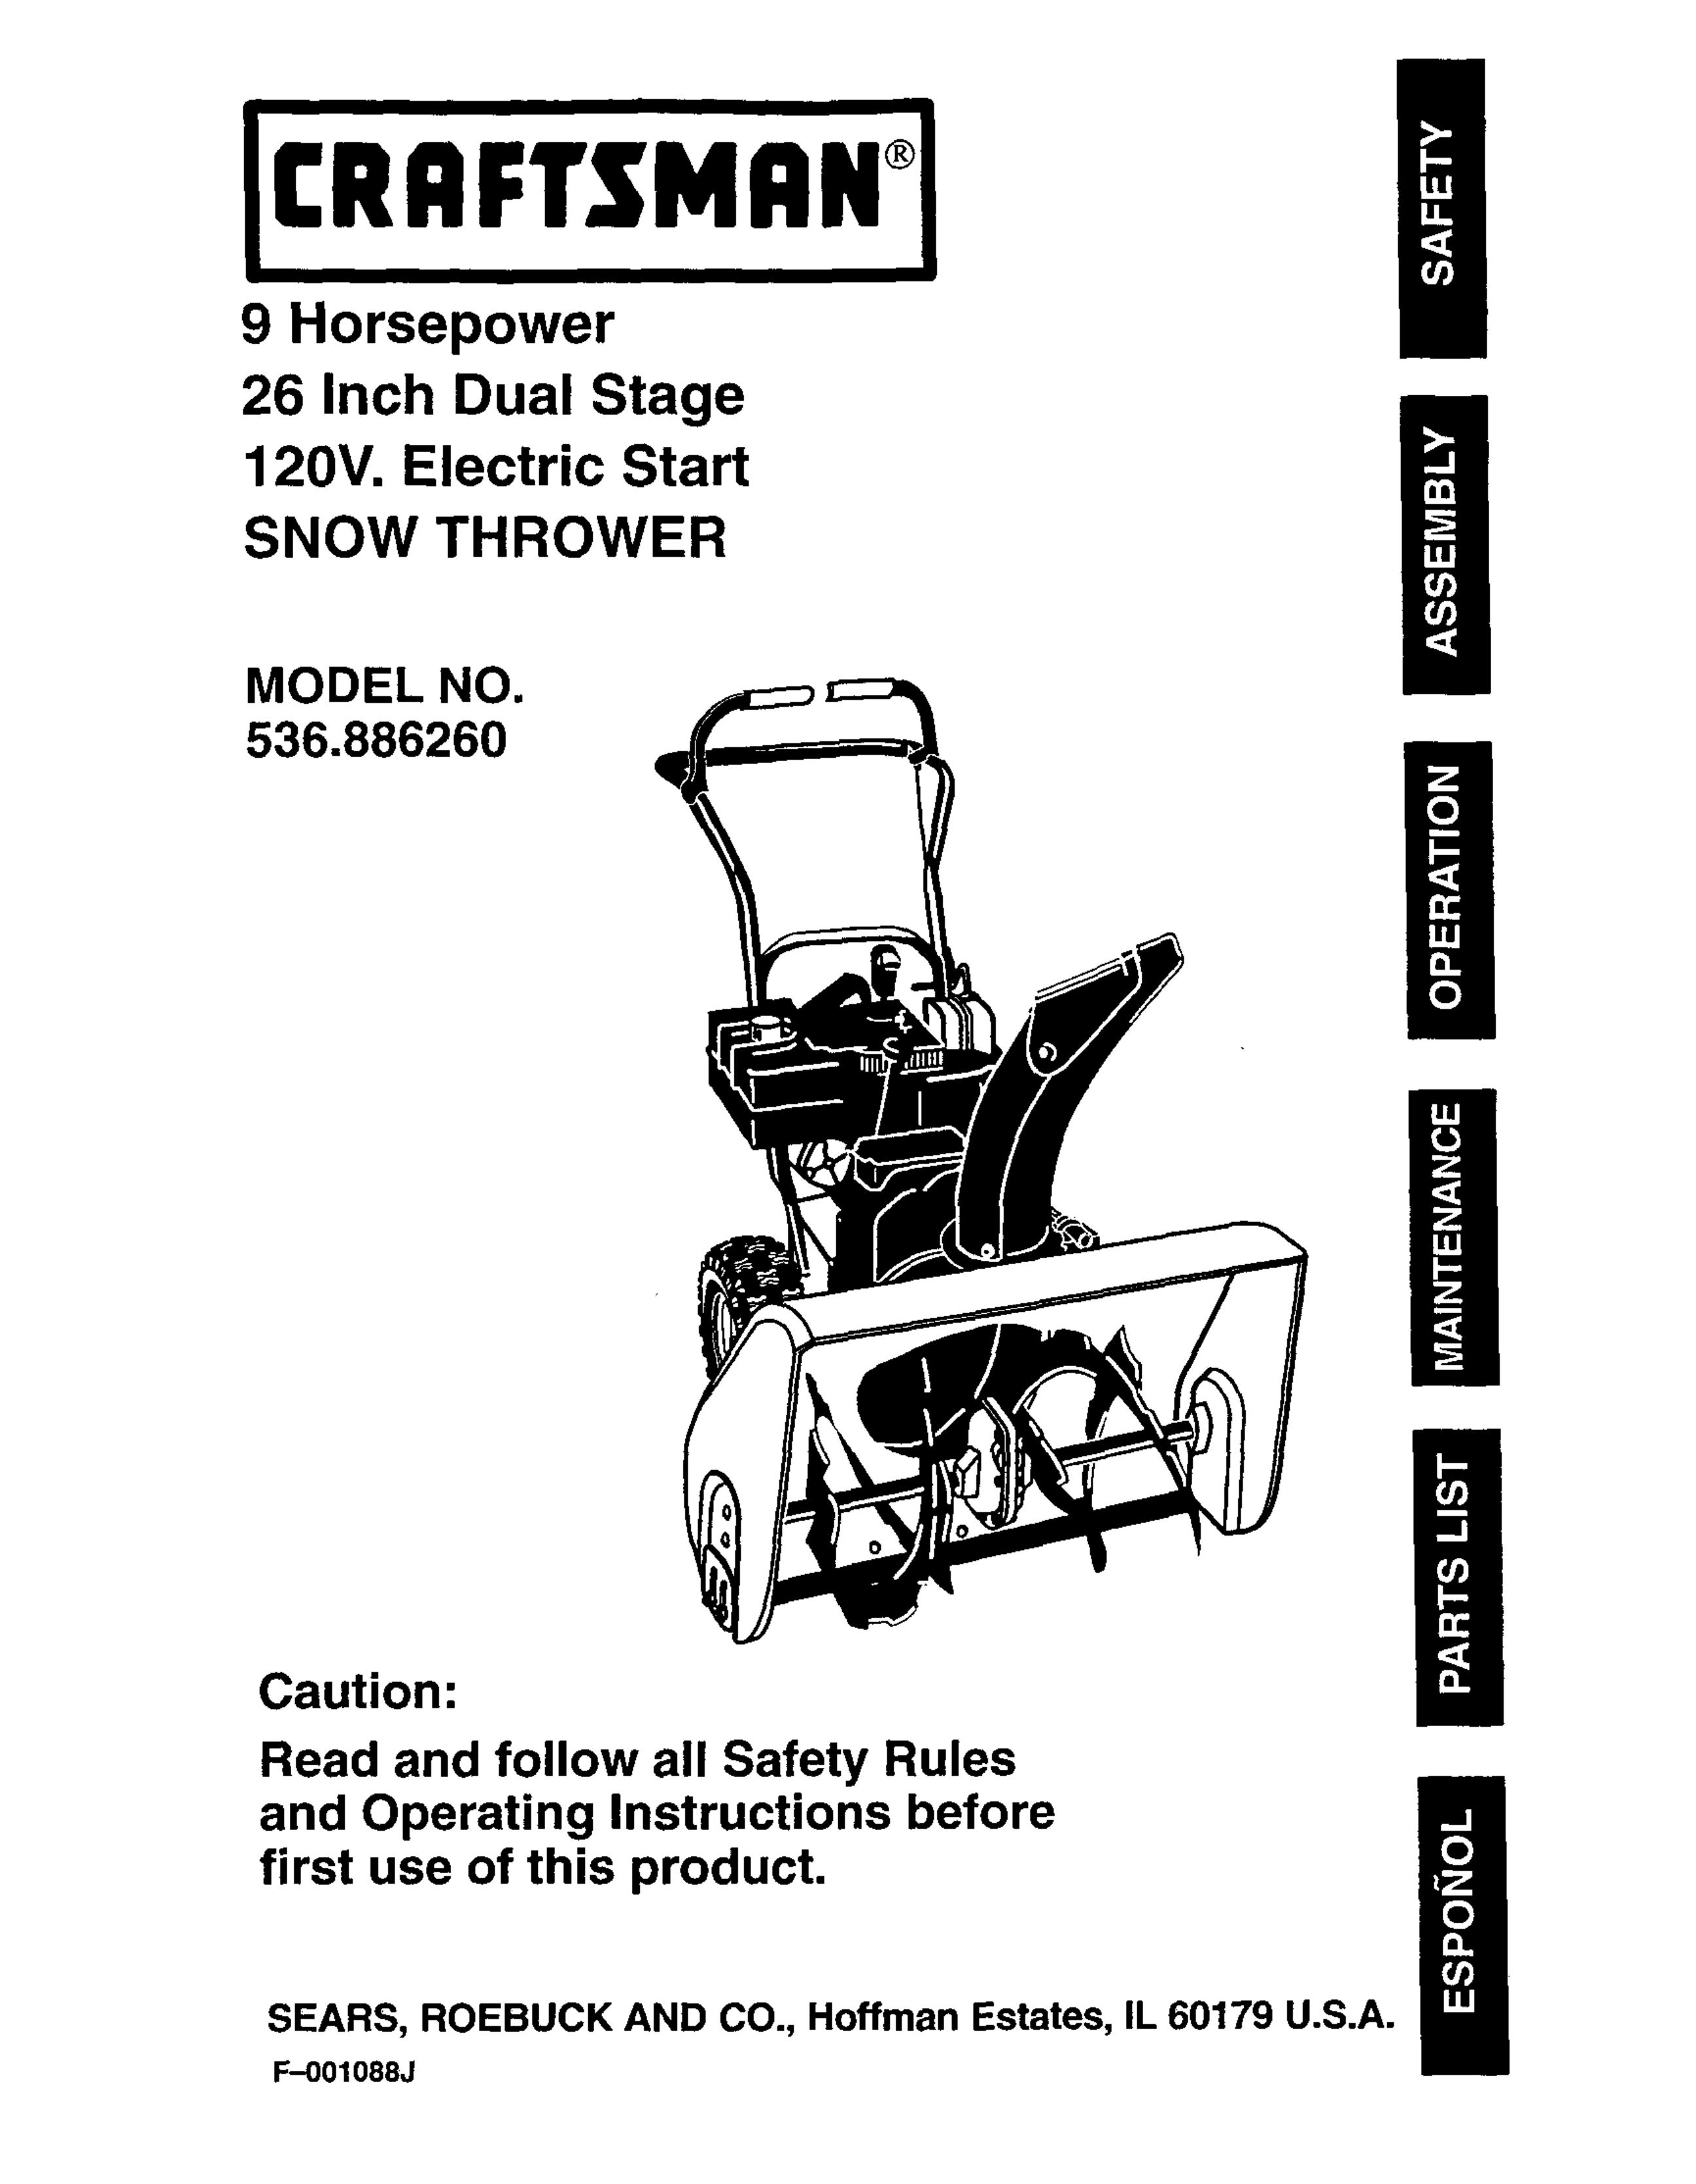 Craftsman 536.88626 Snow Blower User Manual